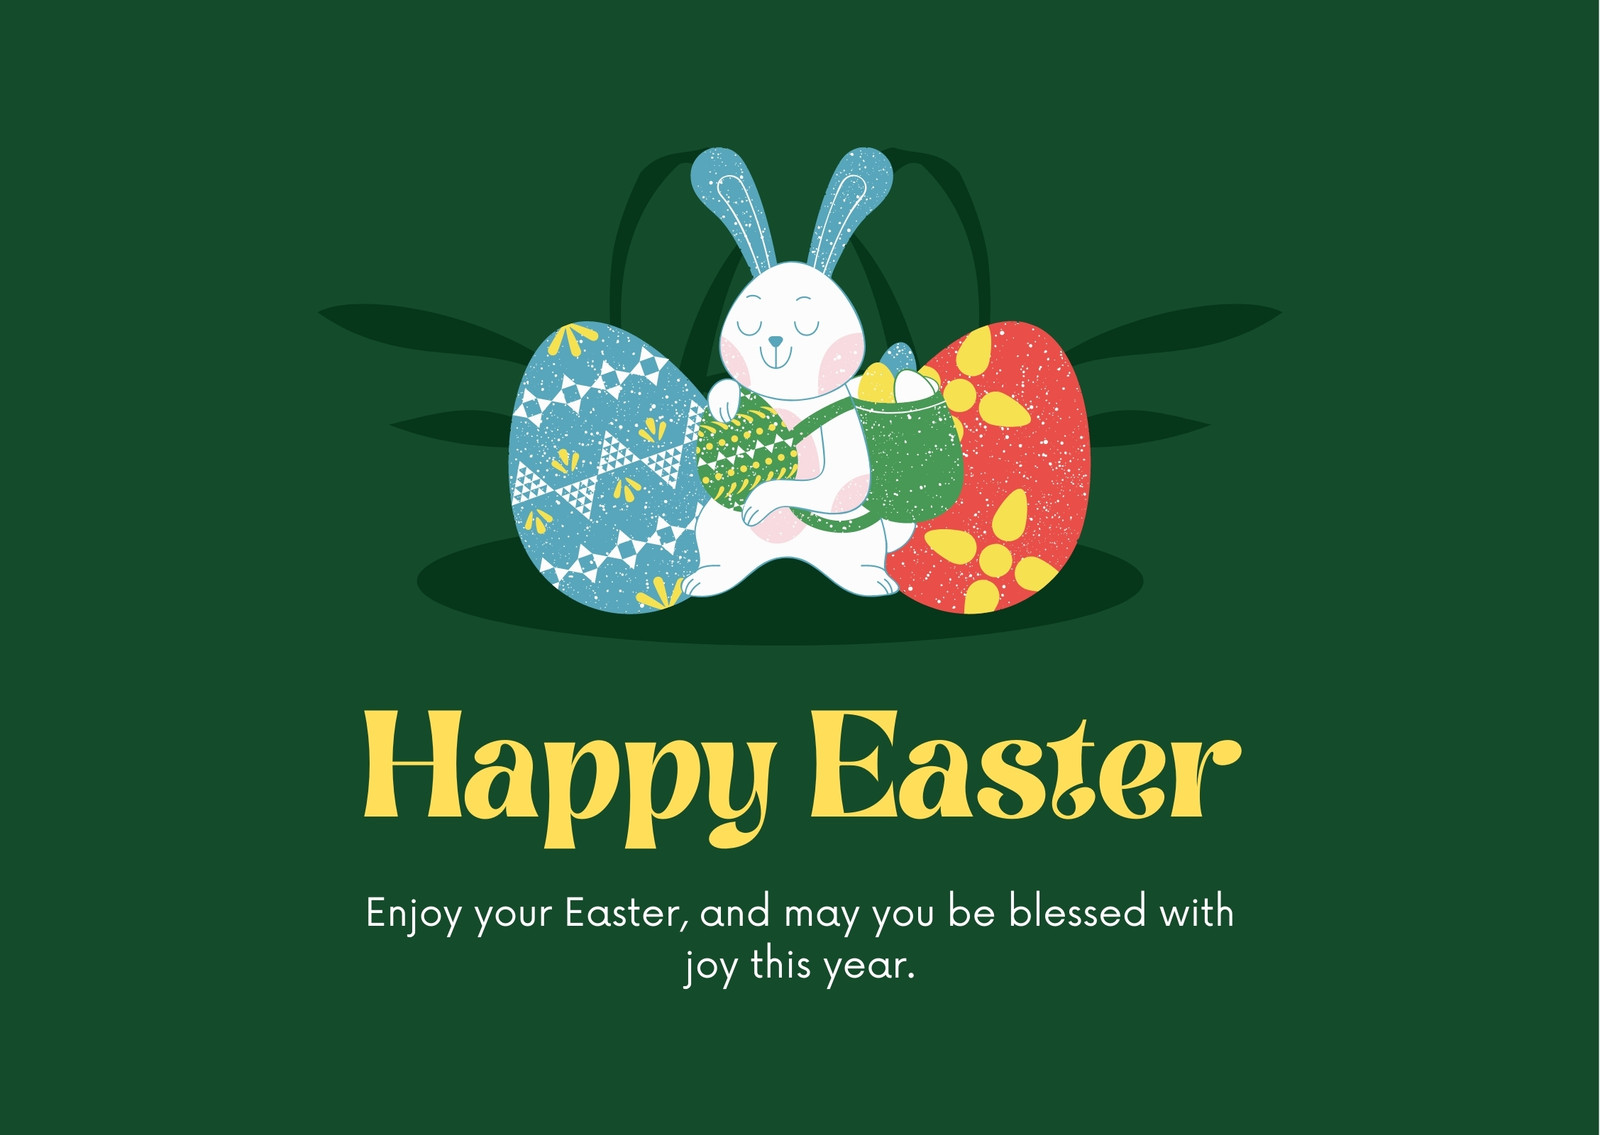 Free printable, customizable Easter card templates